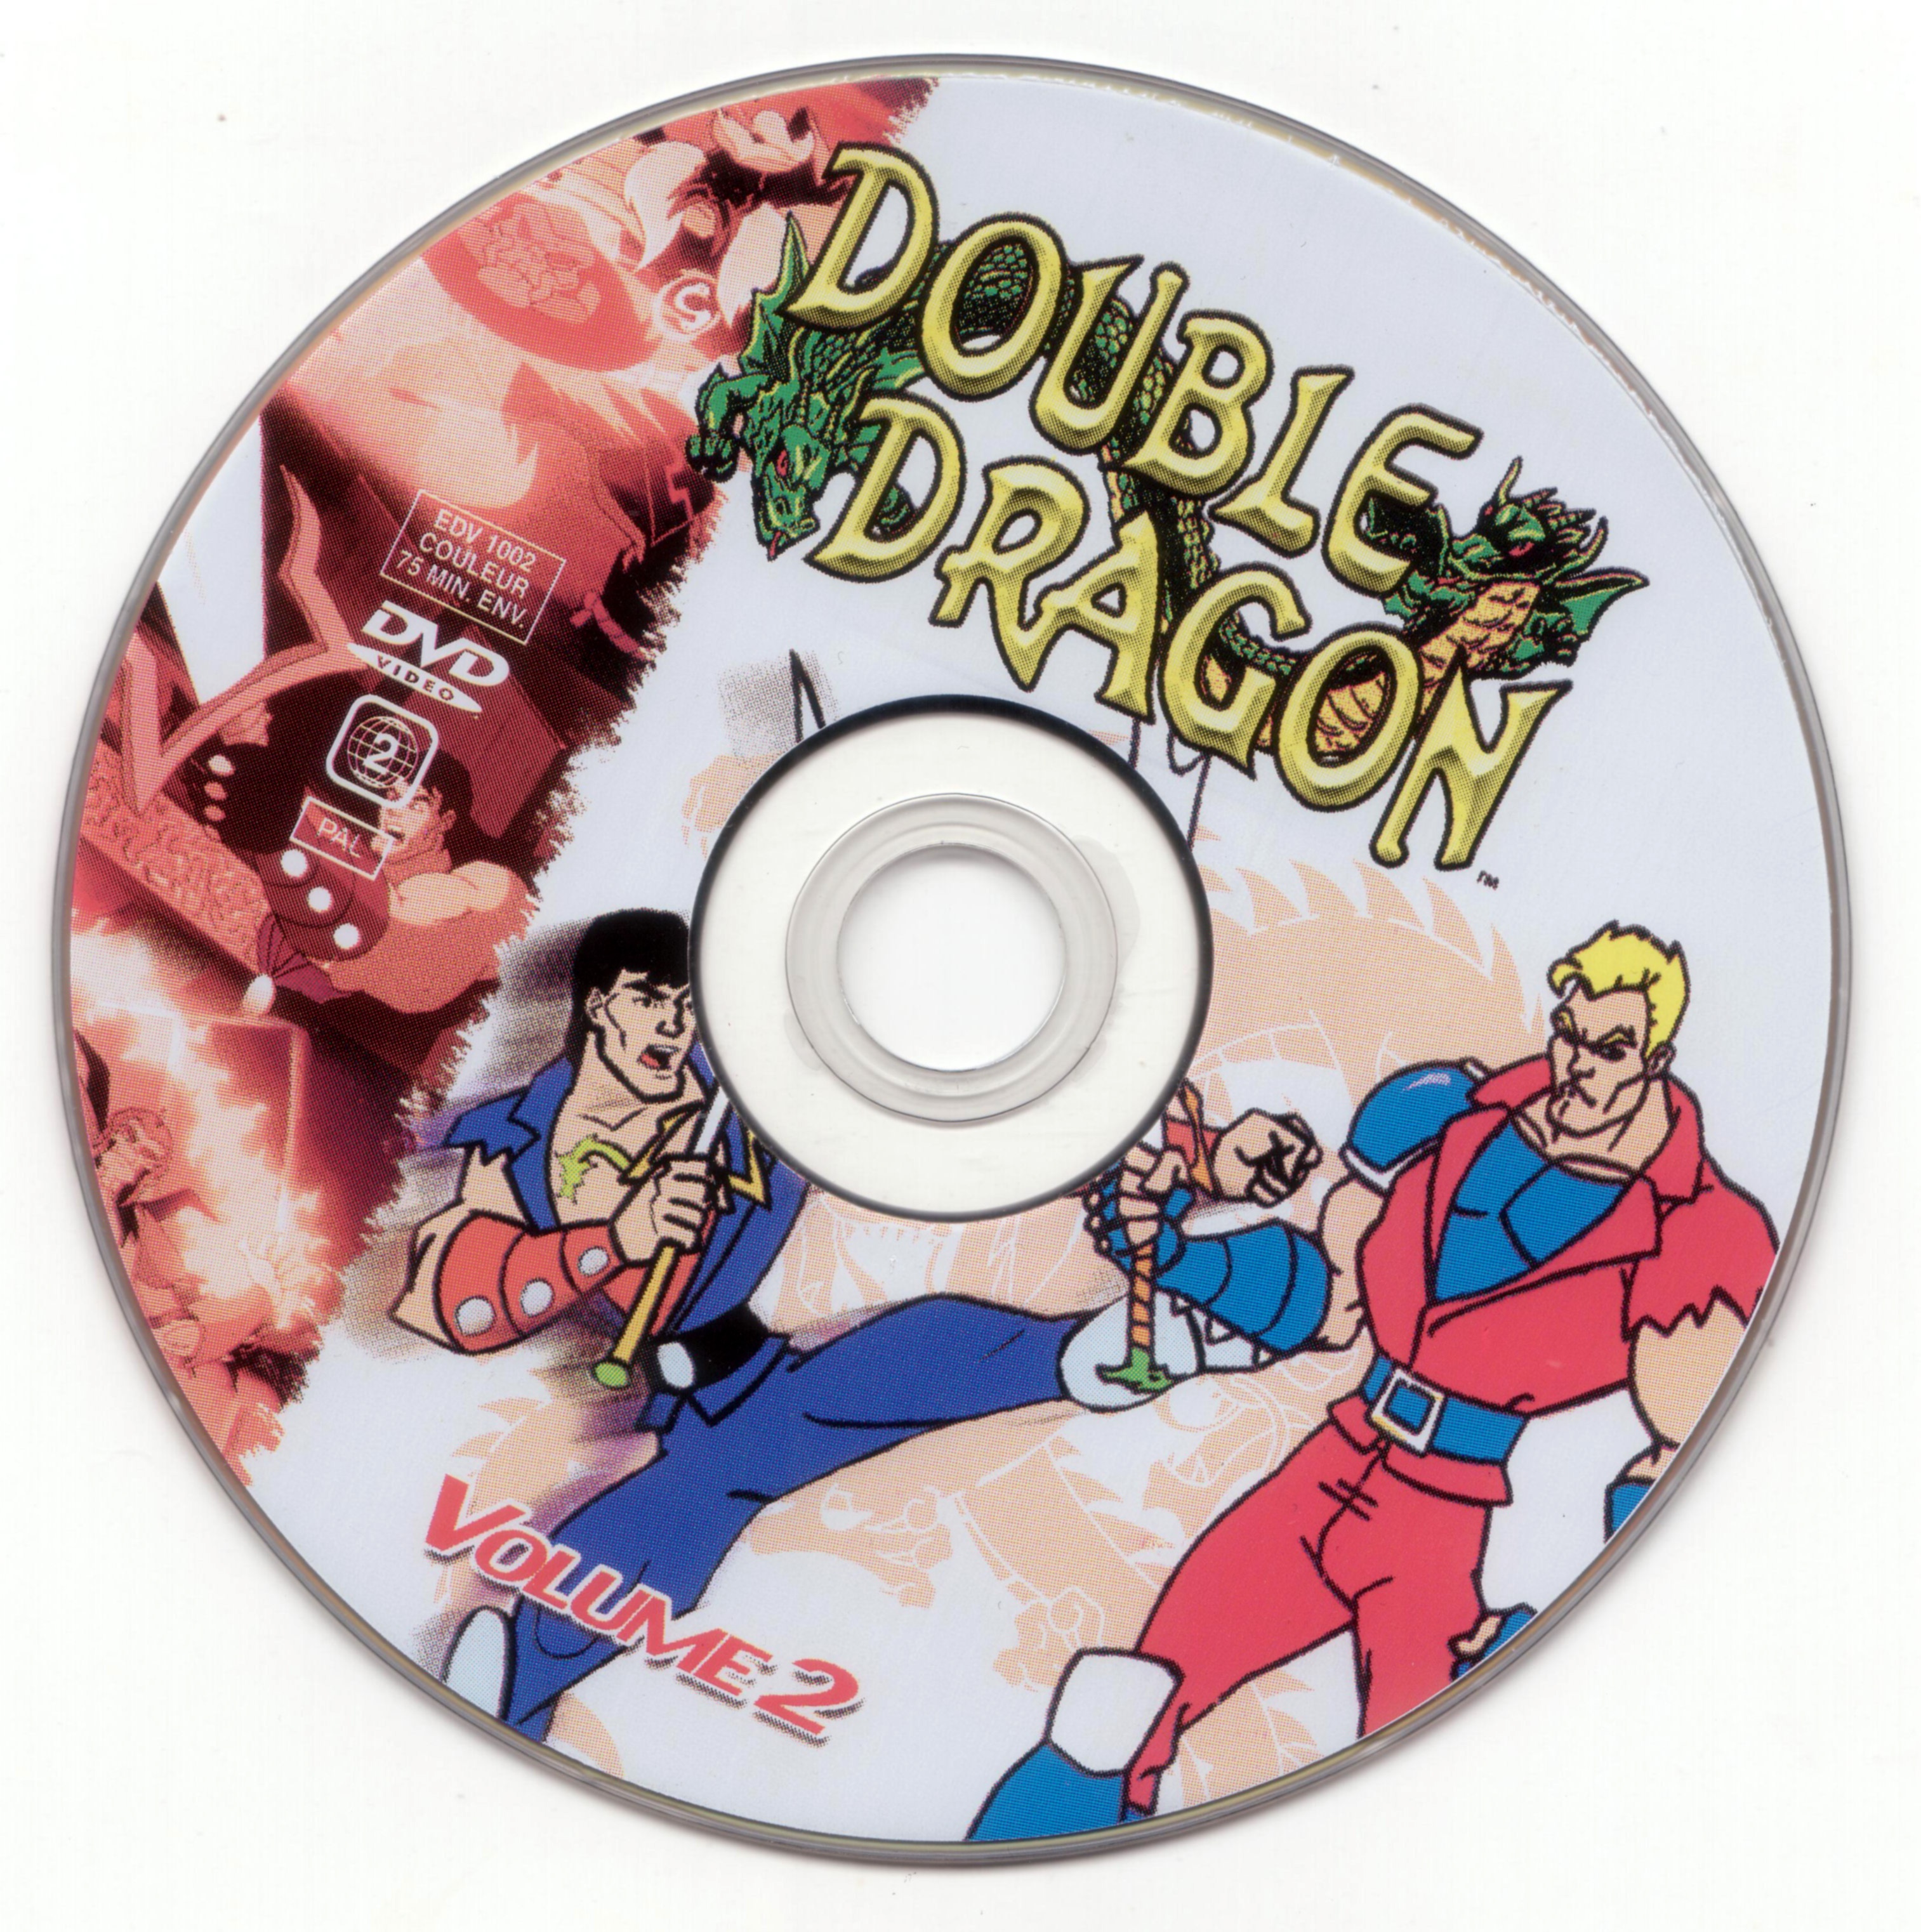 Double dragon vol 2